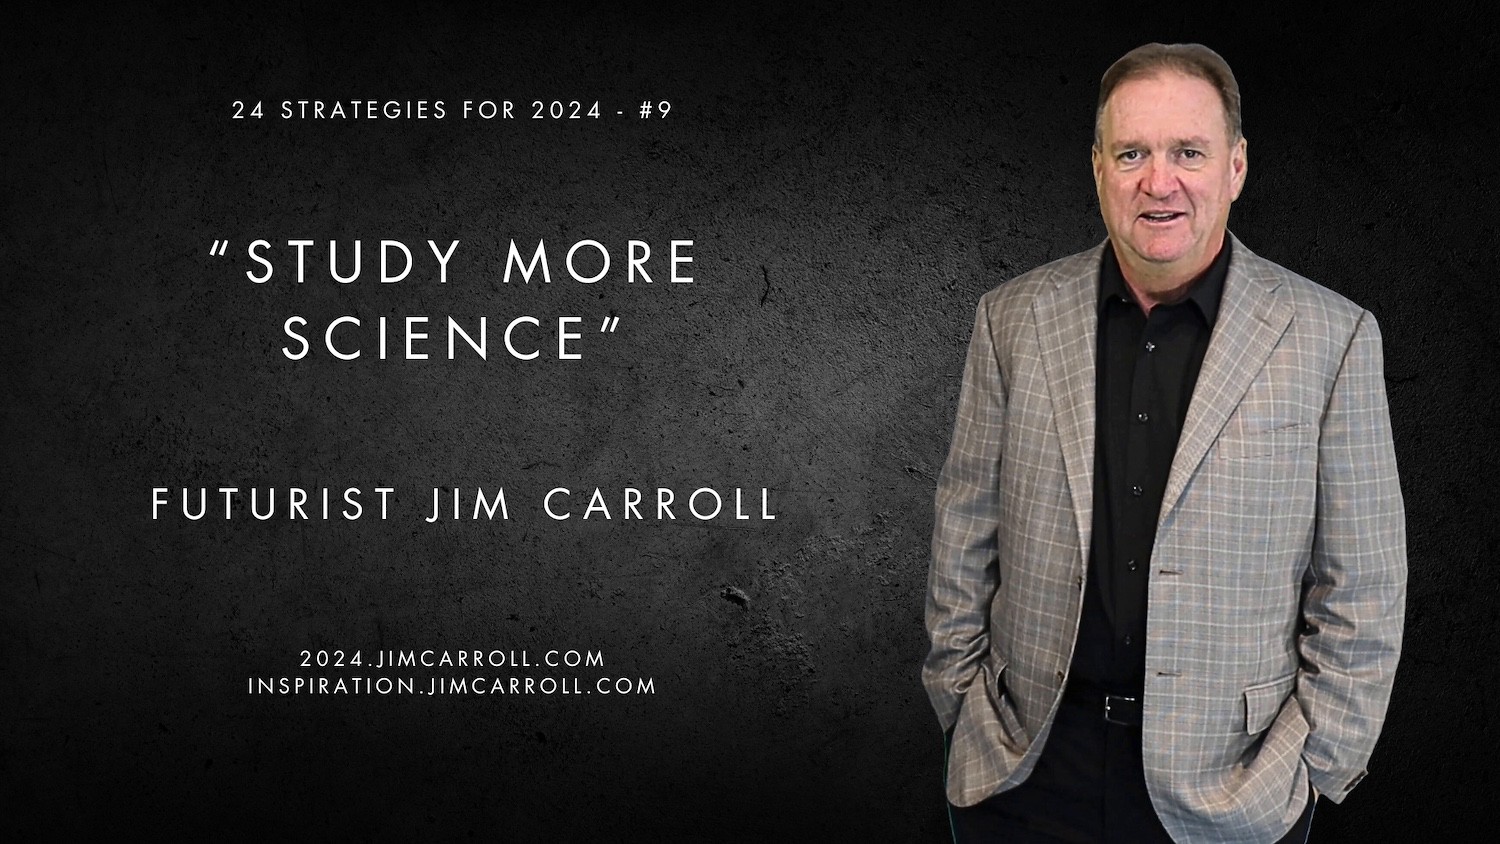 "Study more science" - Futurist Jim Carroll